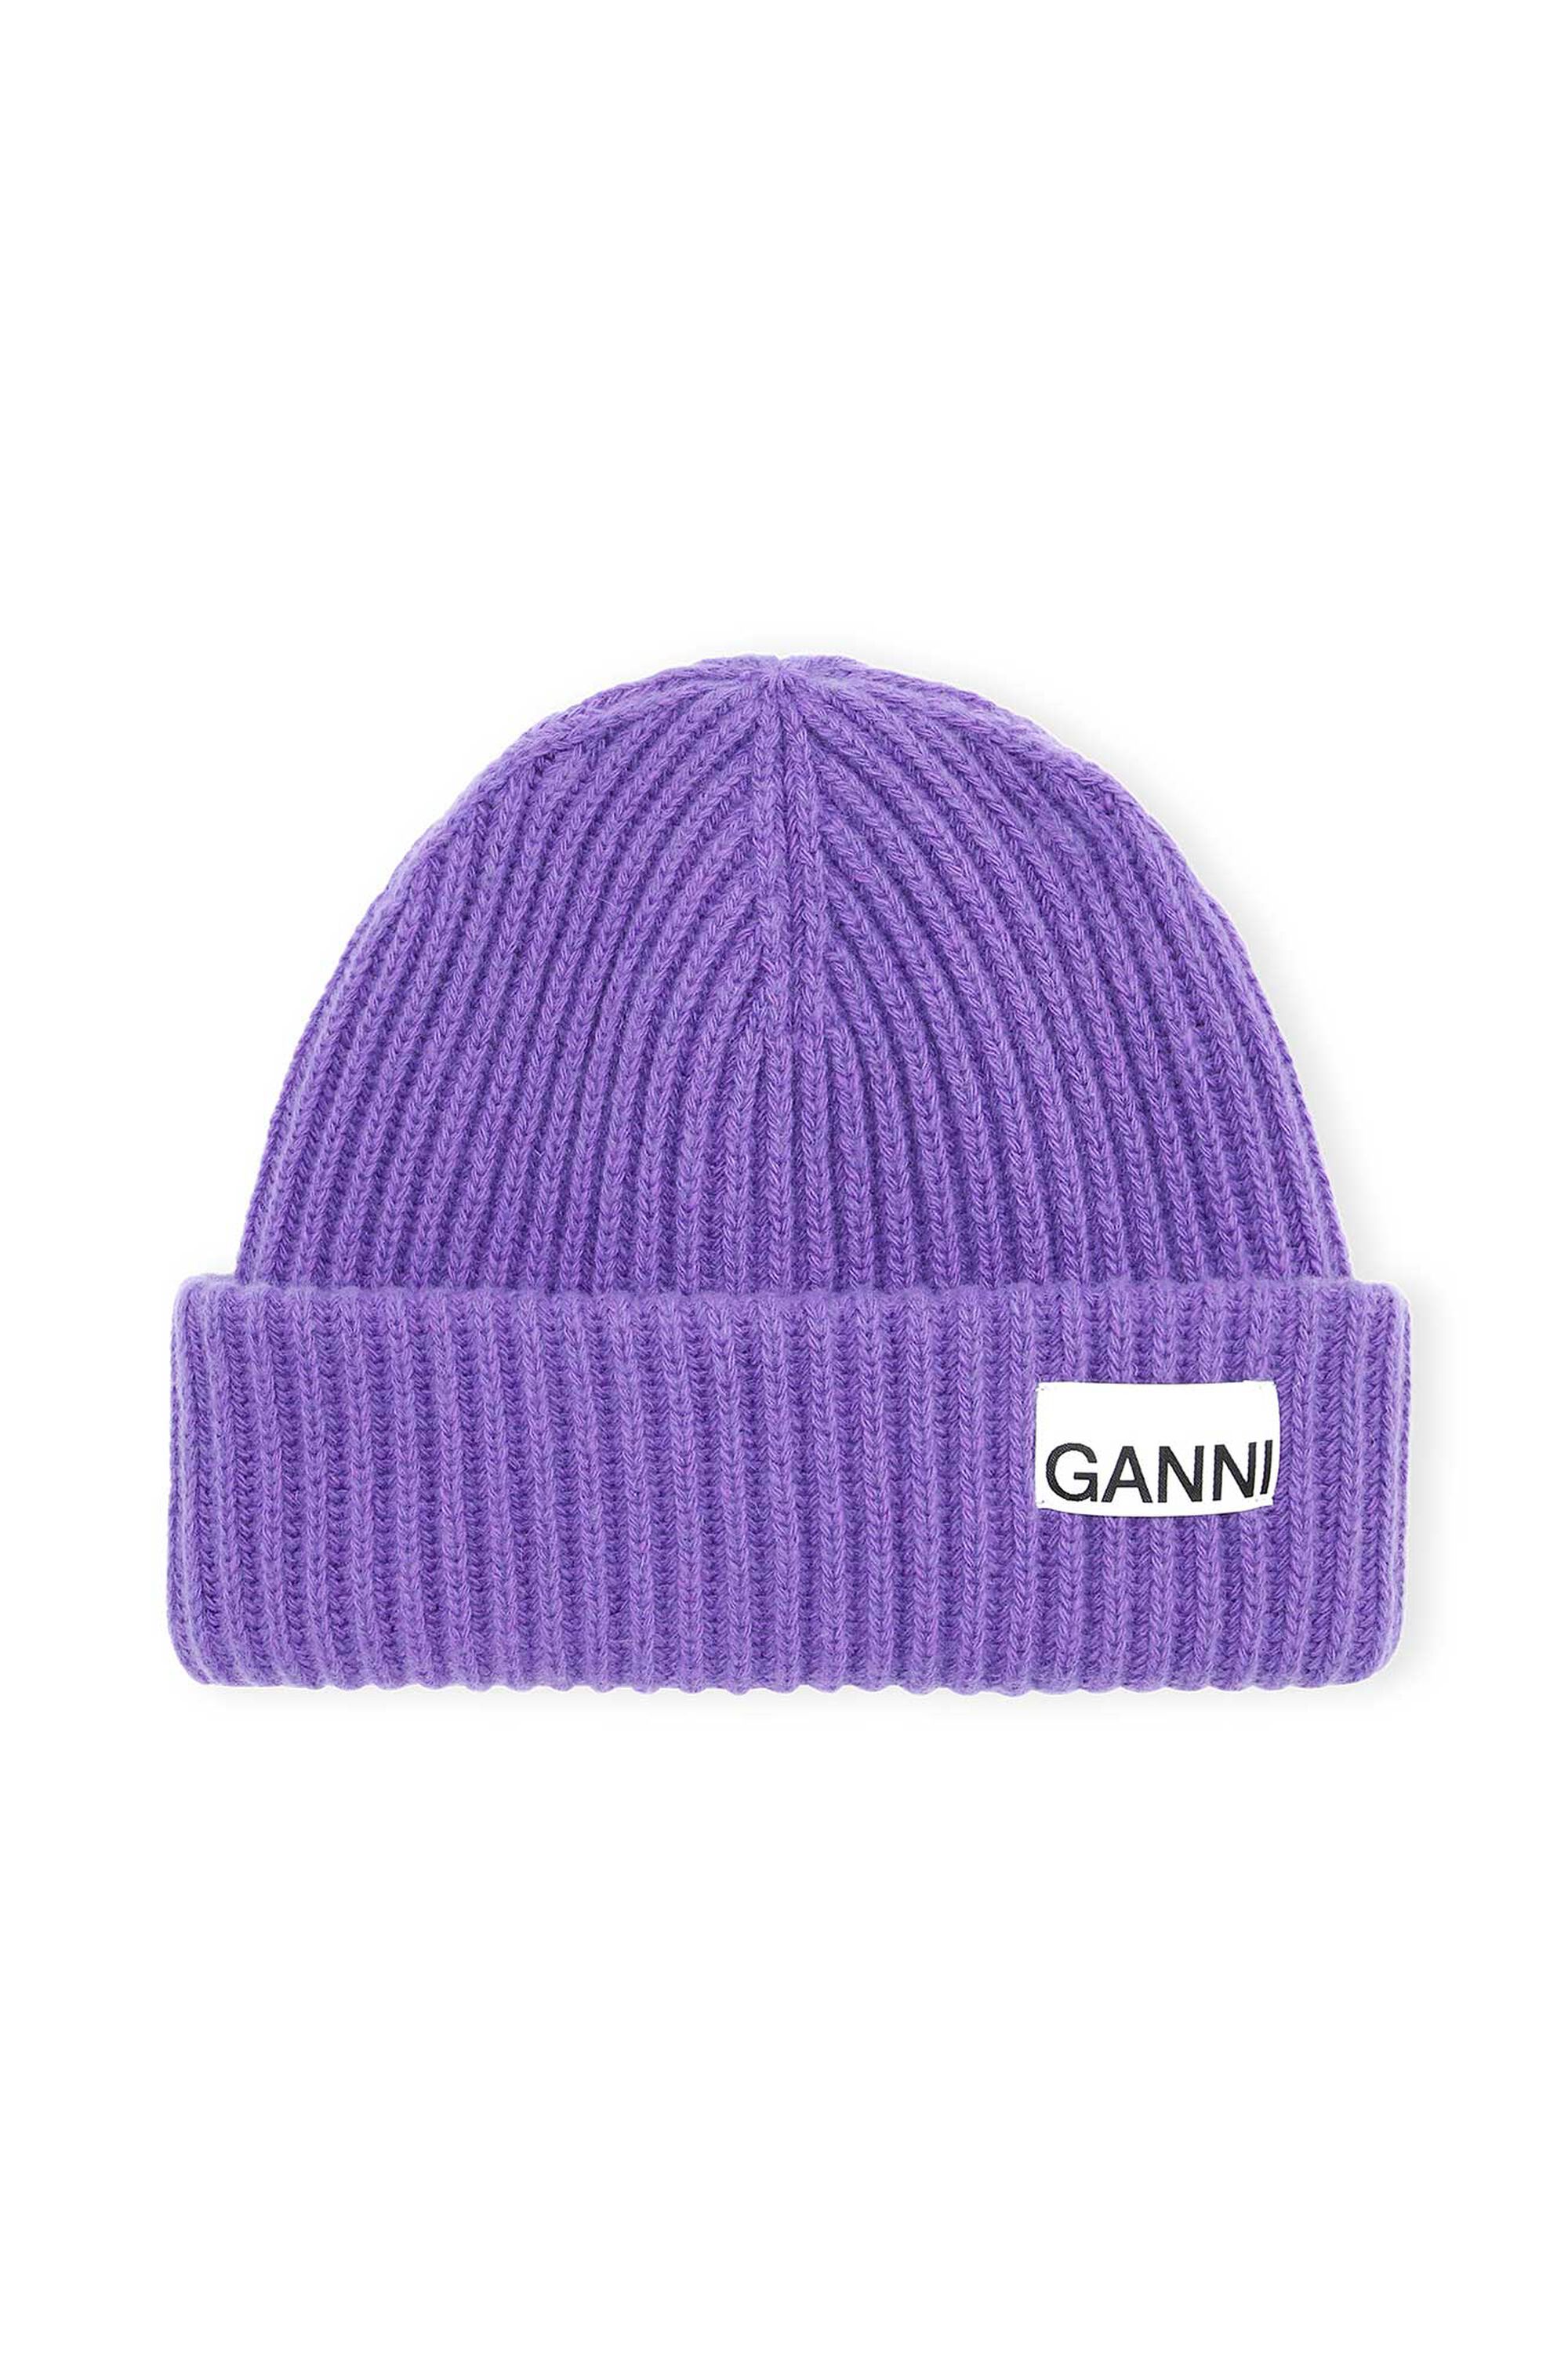 ganni.com | Recycled Wool Beanie